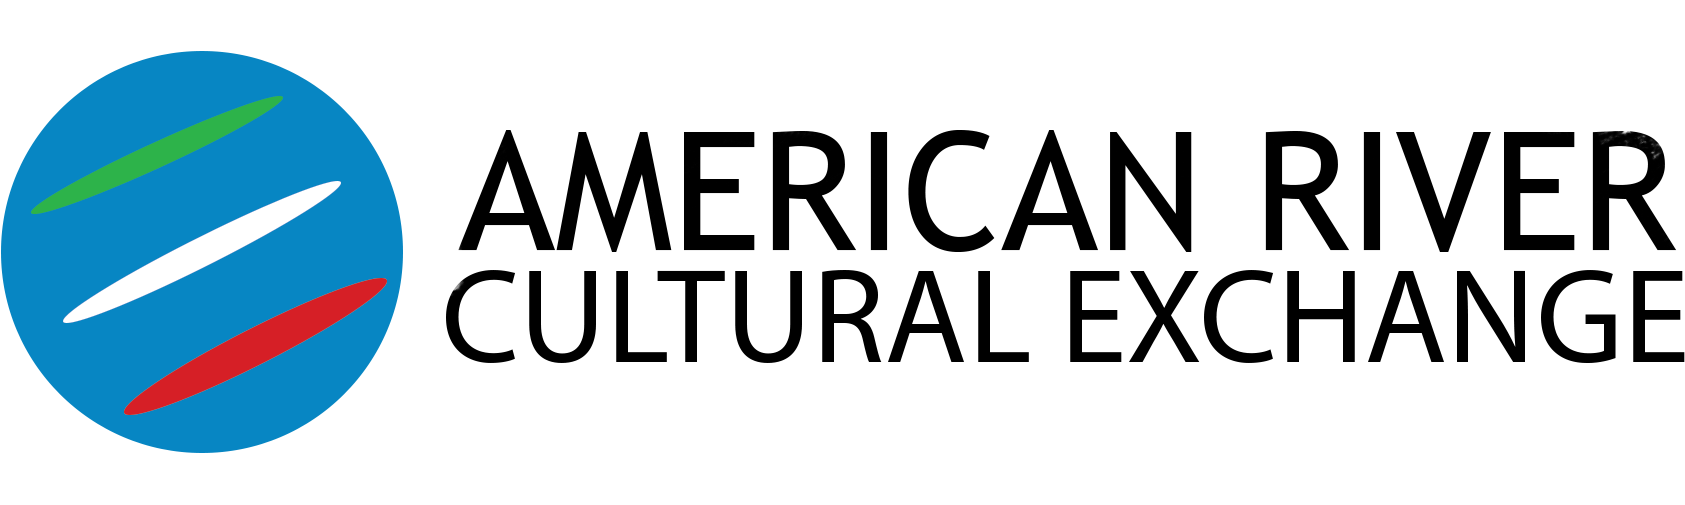 American River Cultural Exchange